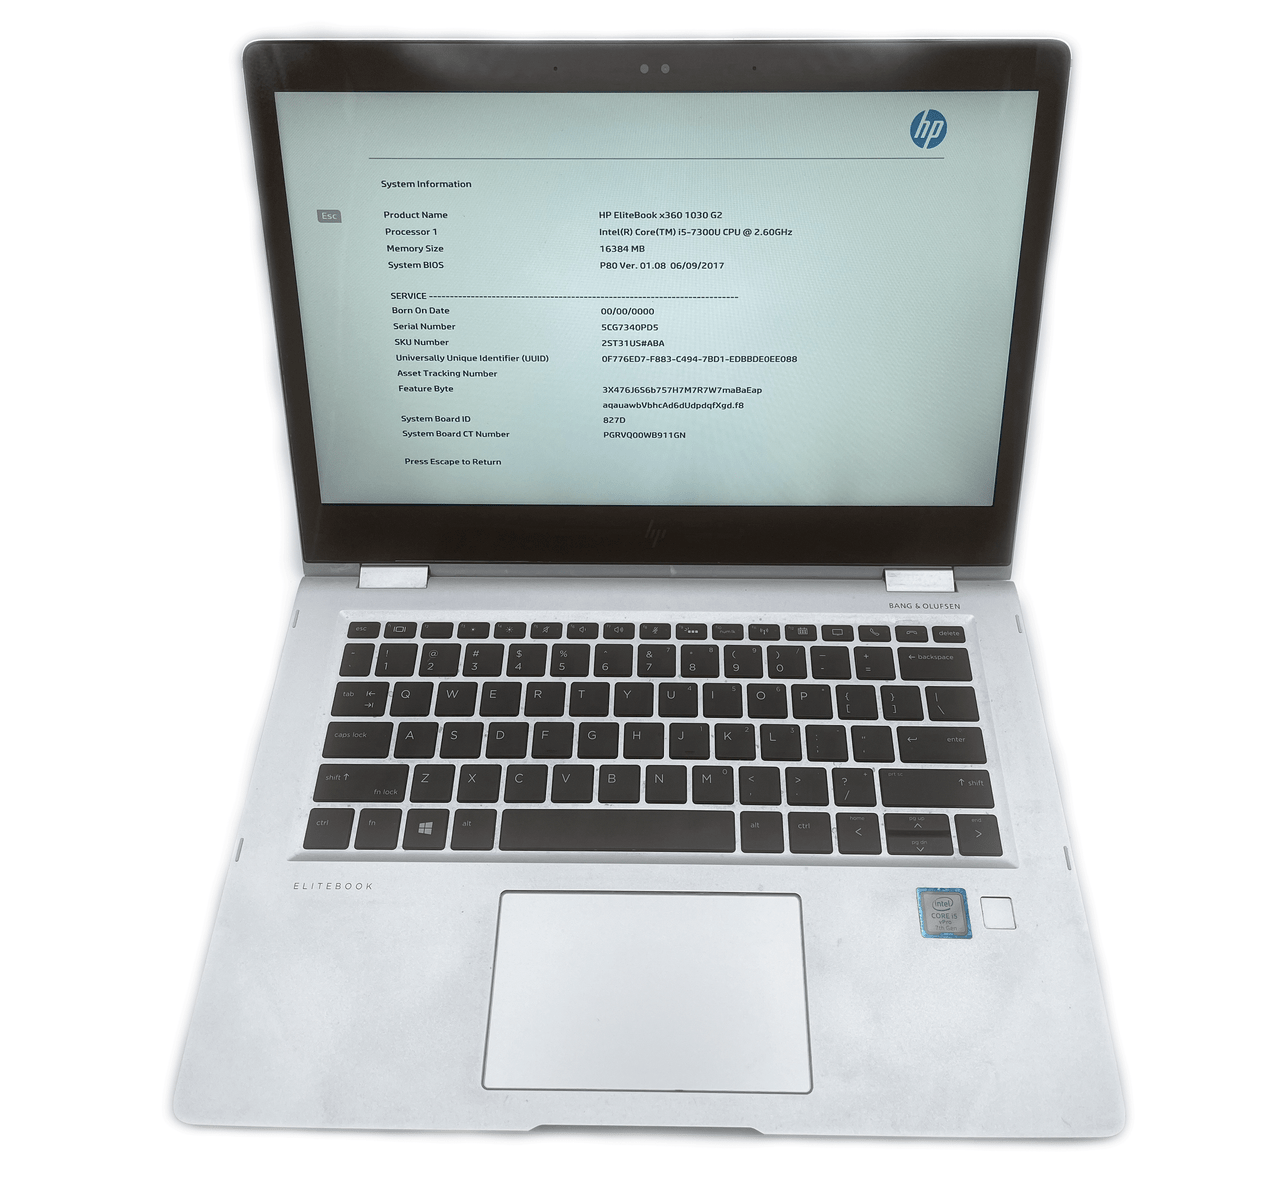 HP EliteBook x360 1030 G2 TouchScreen (Intel i5-7300U, 16GB RAM, 256GB SSD)